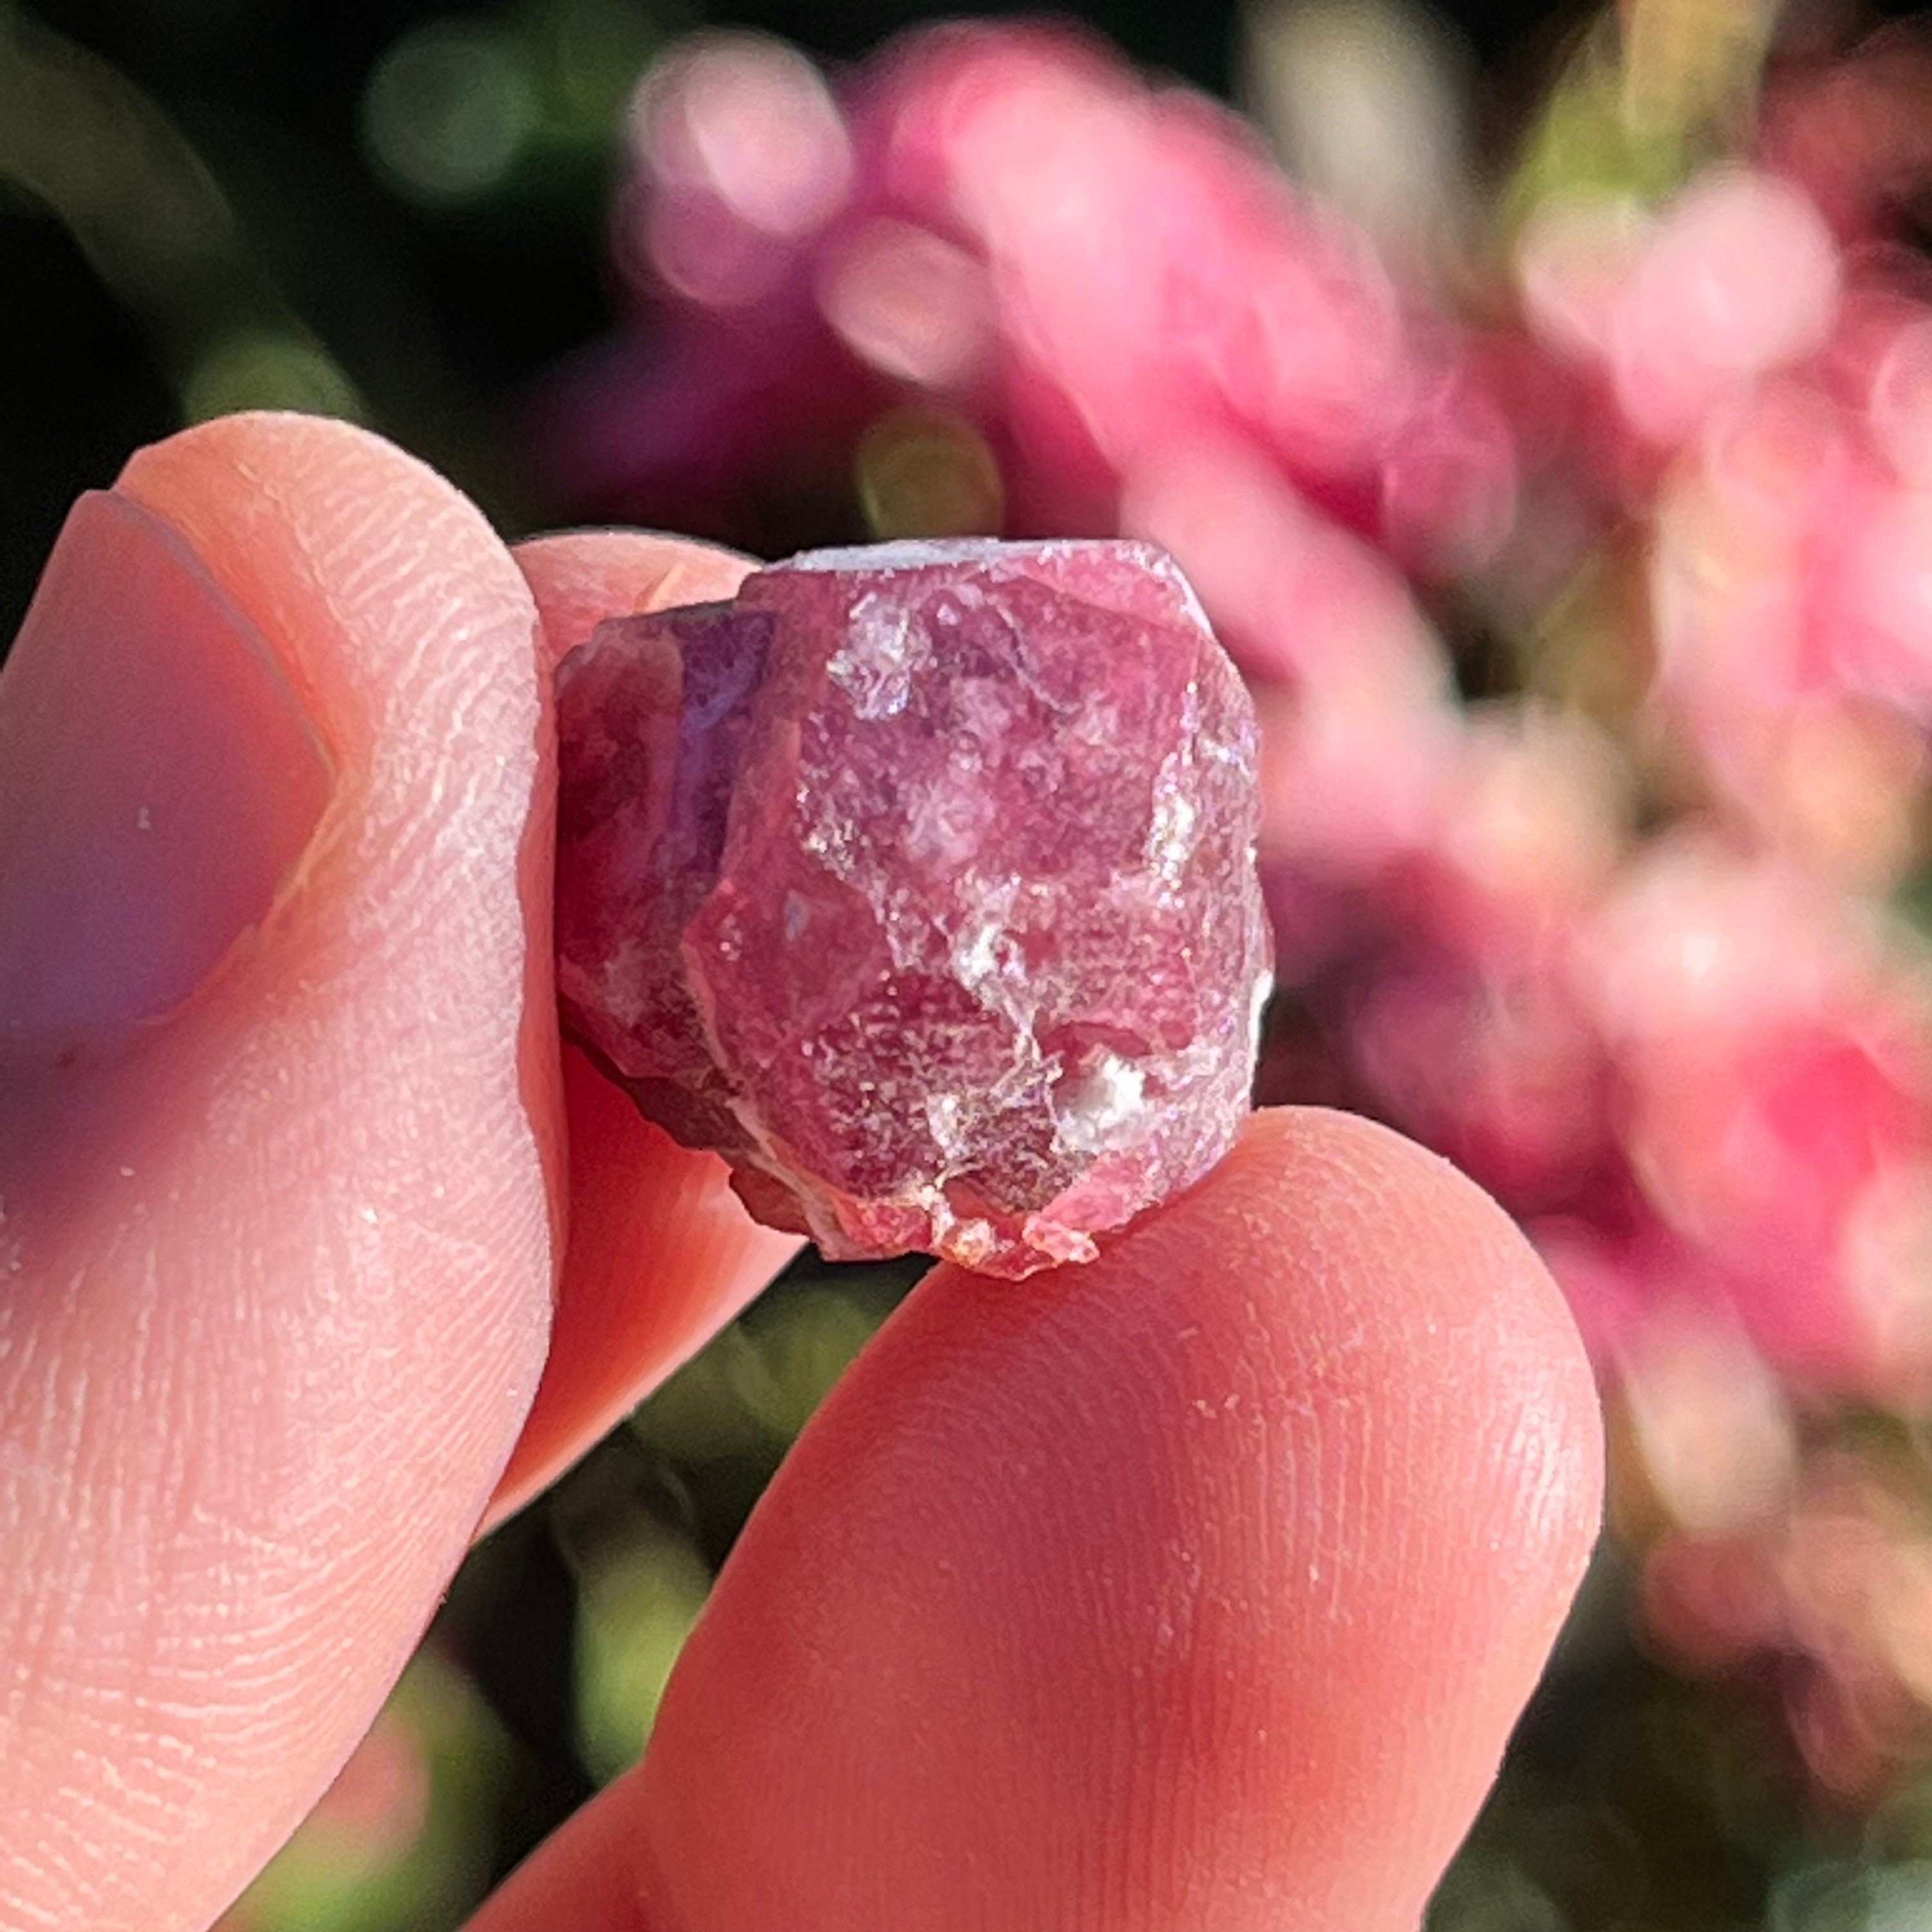 Garnet (raspberry) grossular crystals specimen healing crystal - Crystal  Concentrics